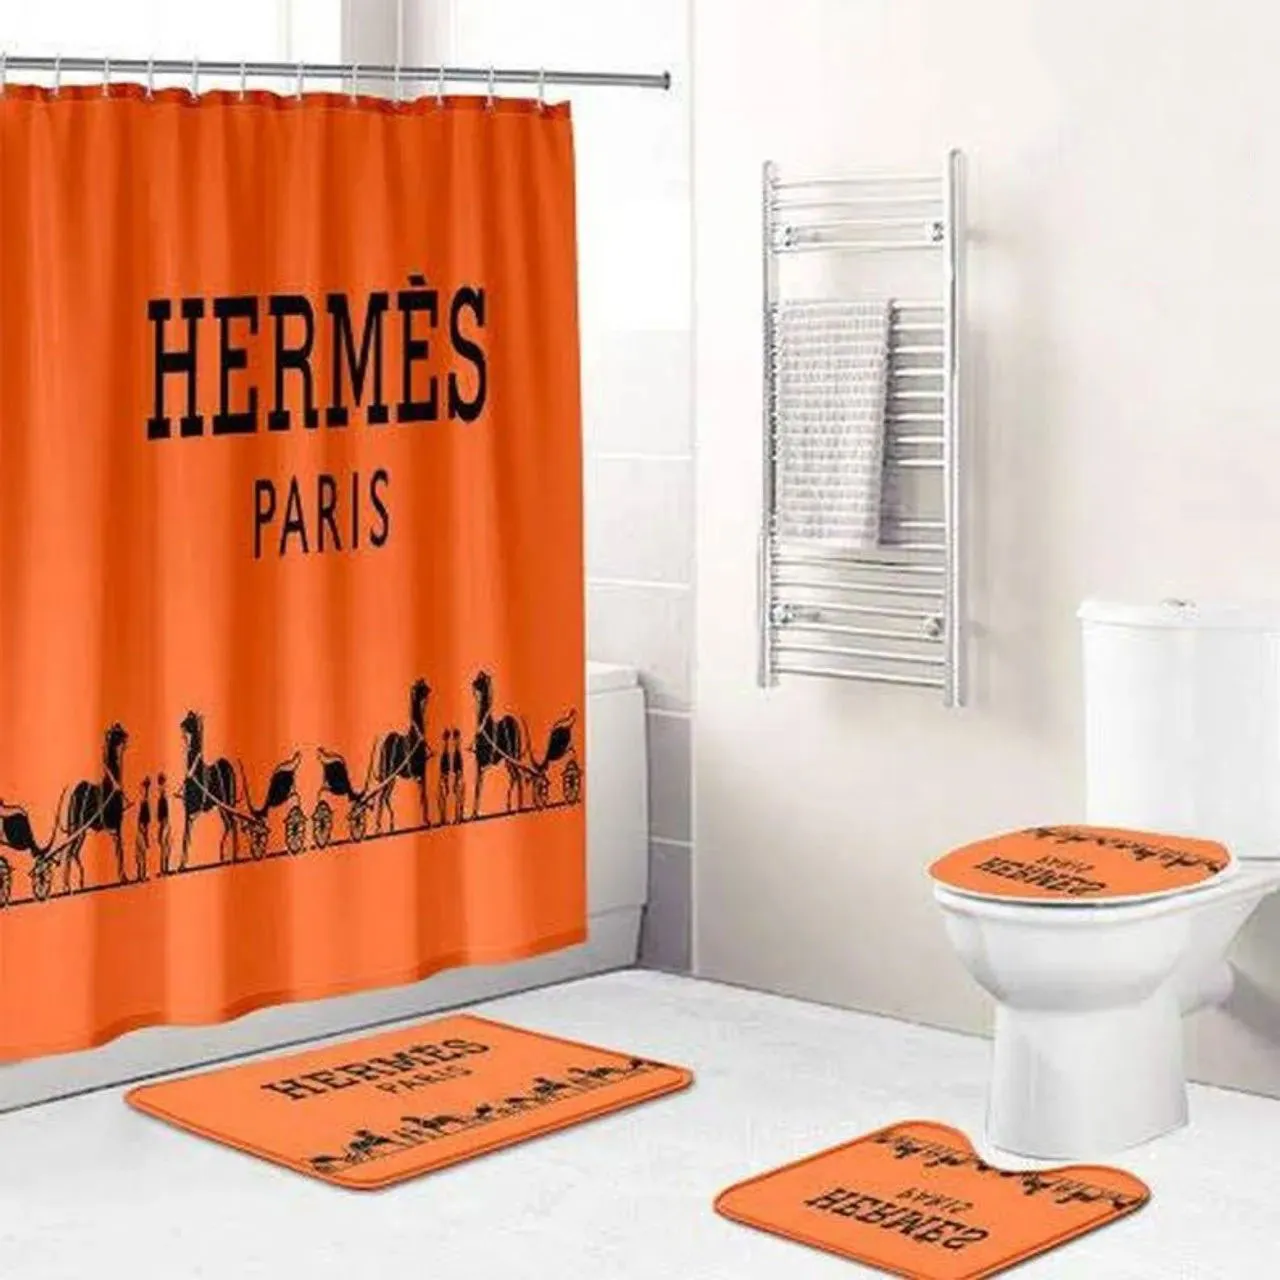 Hermes Paris Orange Bathroom Set Home Decor Bath Mat Luxury Fashion Brand Hypebeast